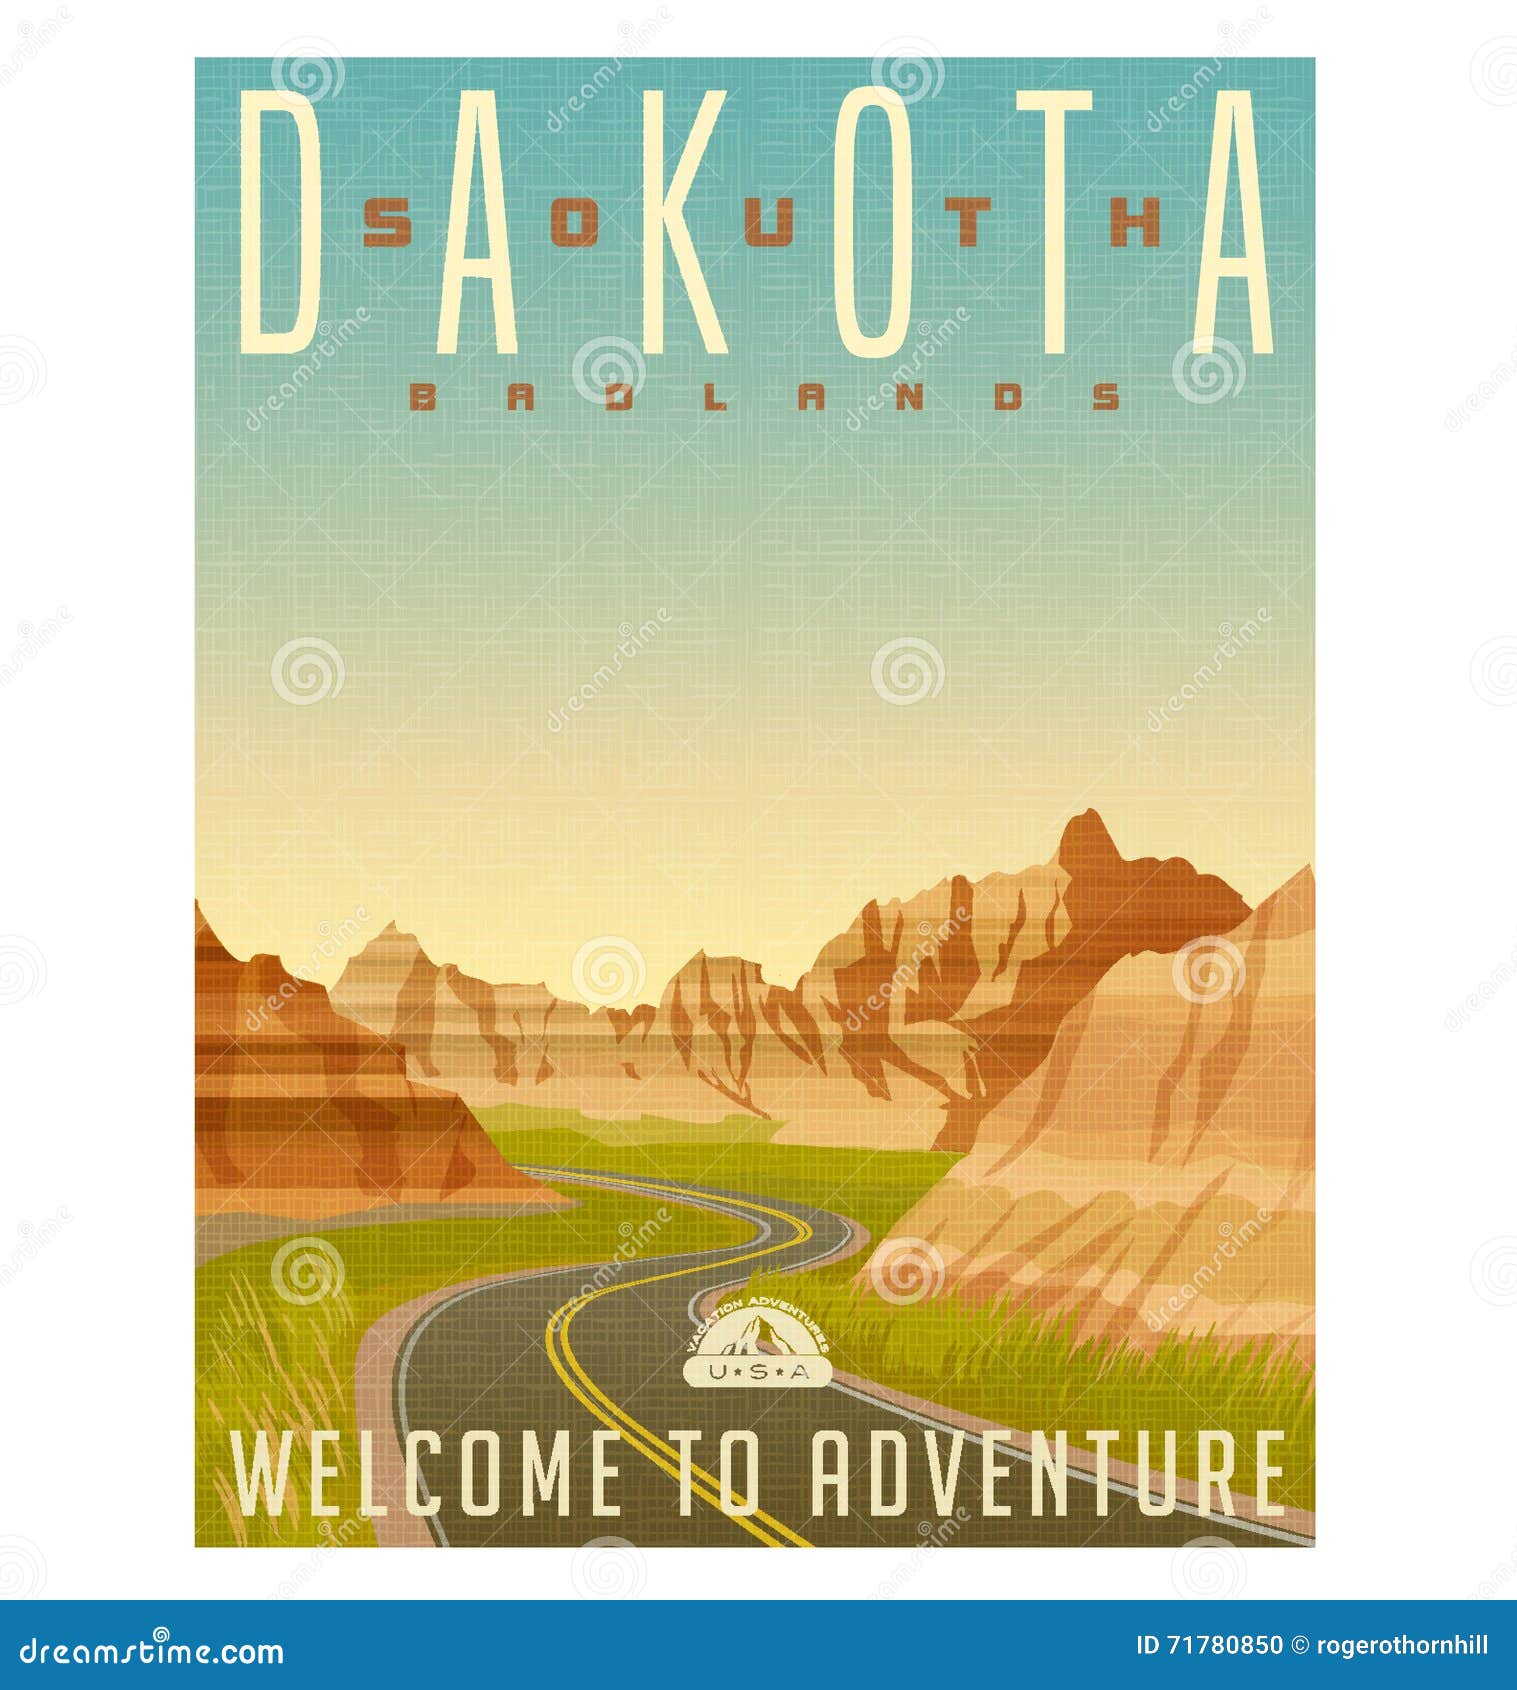 south dakota badlands travel poster or sticker